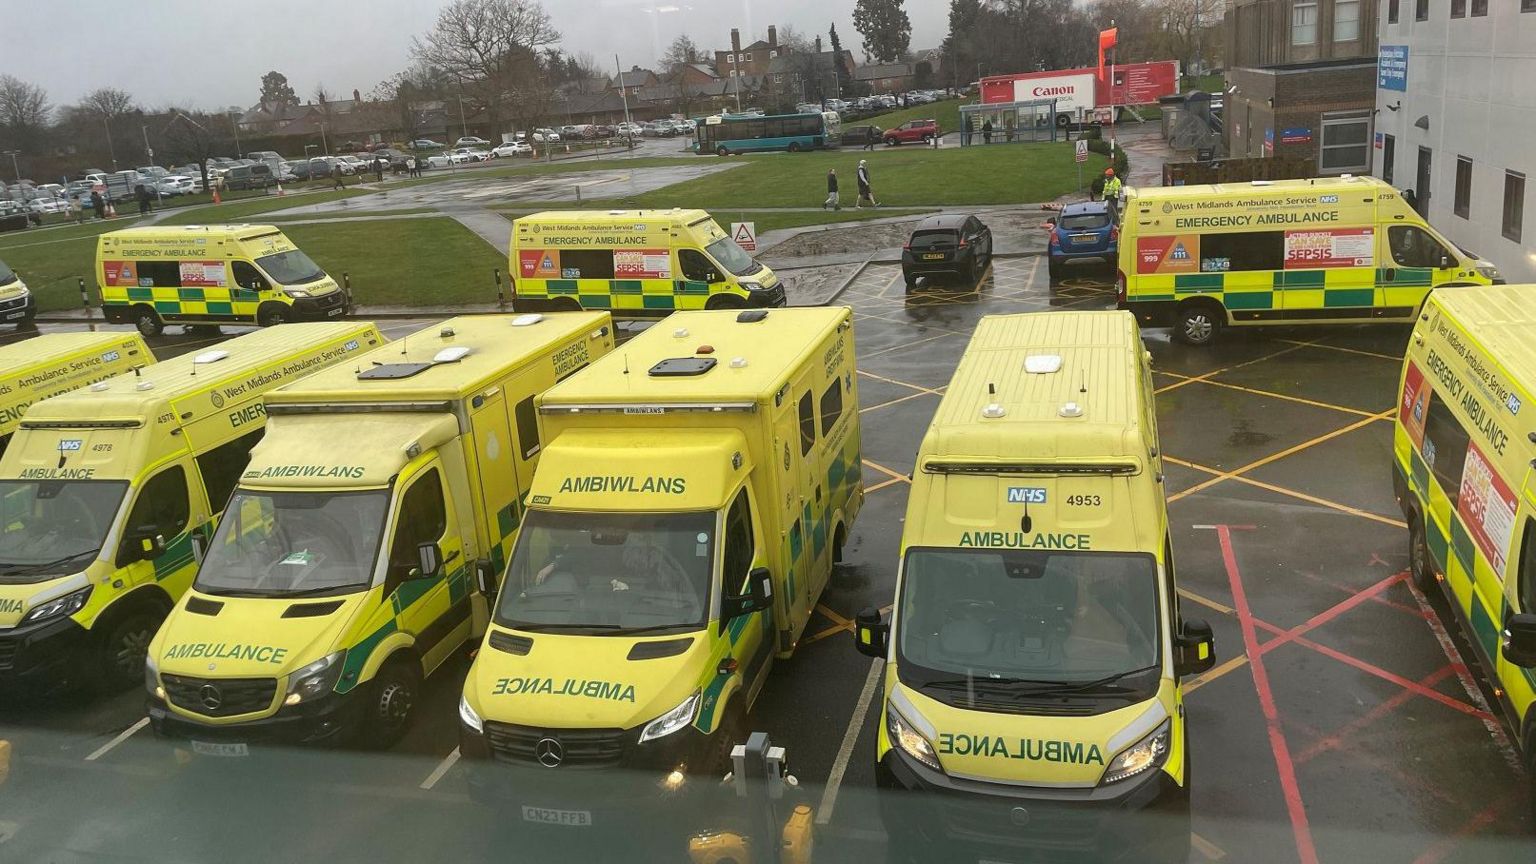 The ambulance waiting area at the Royal Shrewsbury Hospital